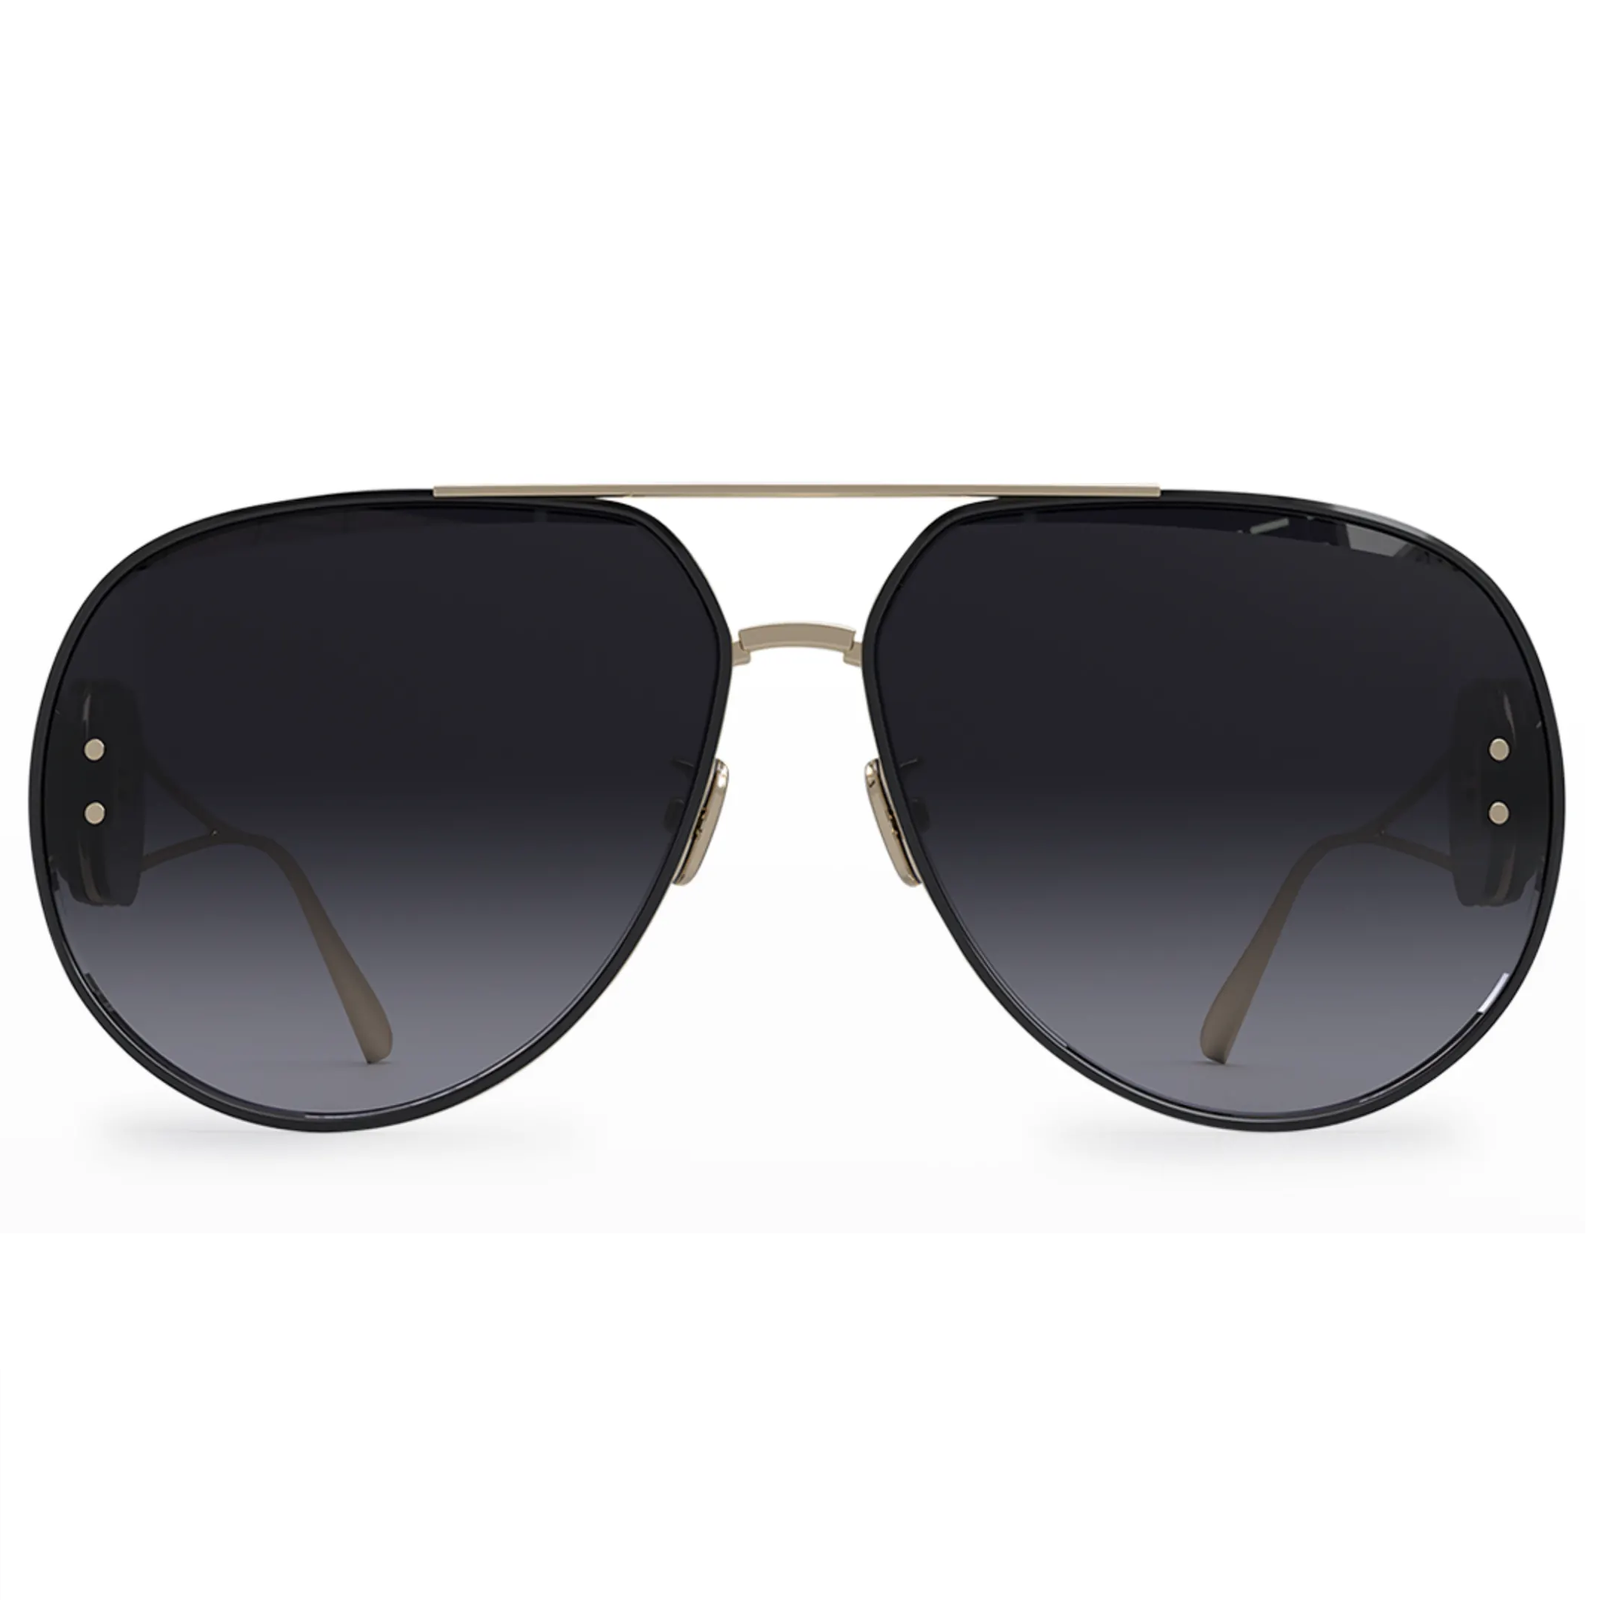 Dior DiorBobby A1U Sunglasses - Purevision - The Sunglasses Shop in Queens